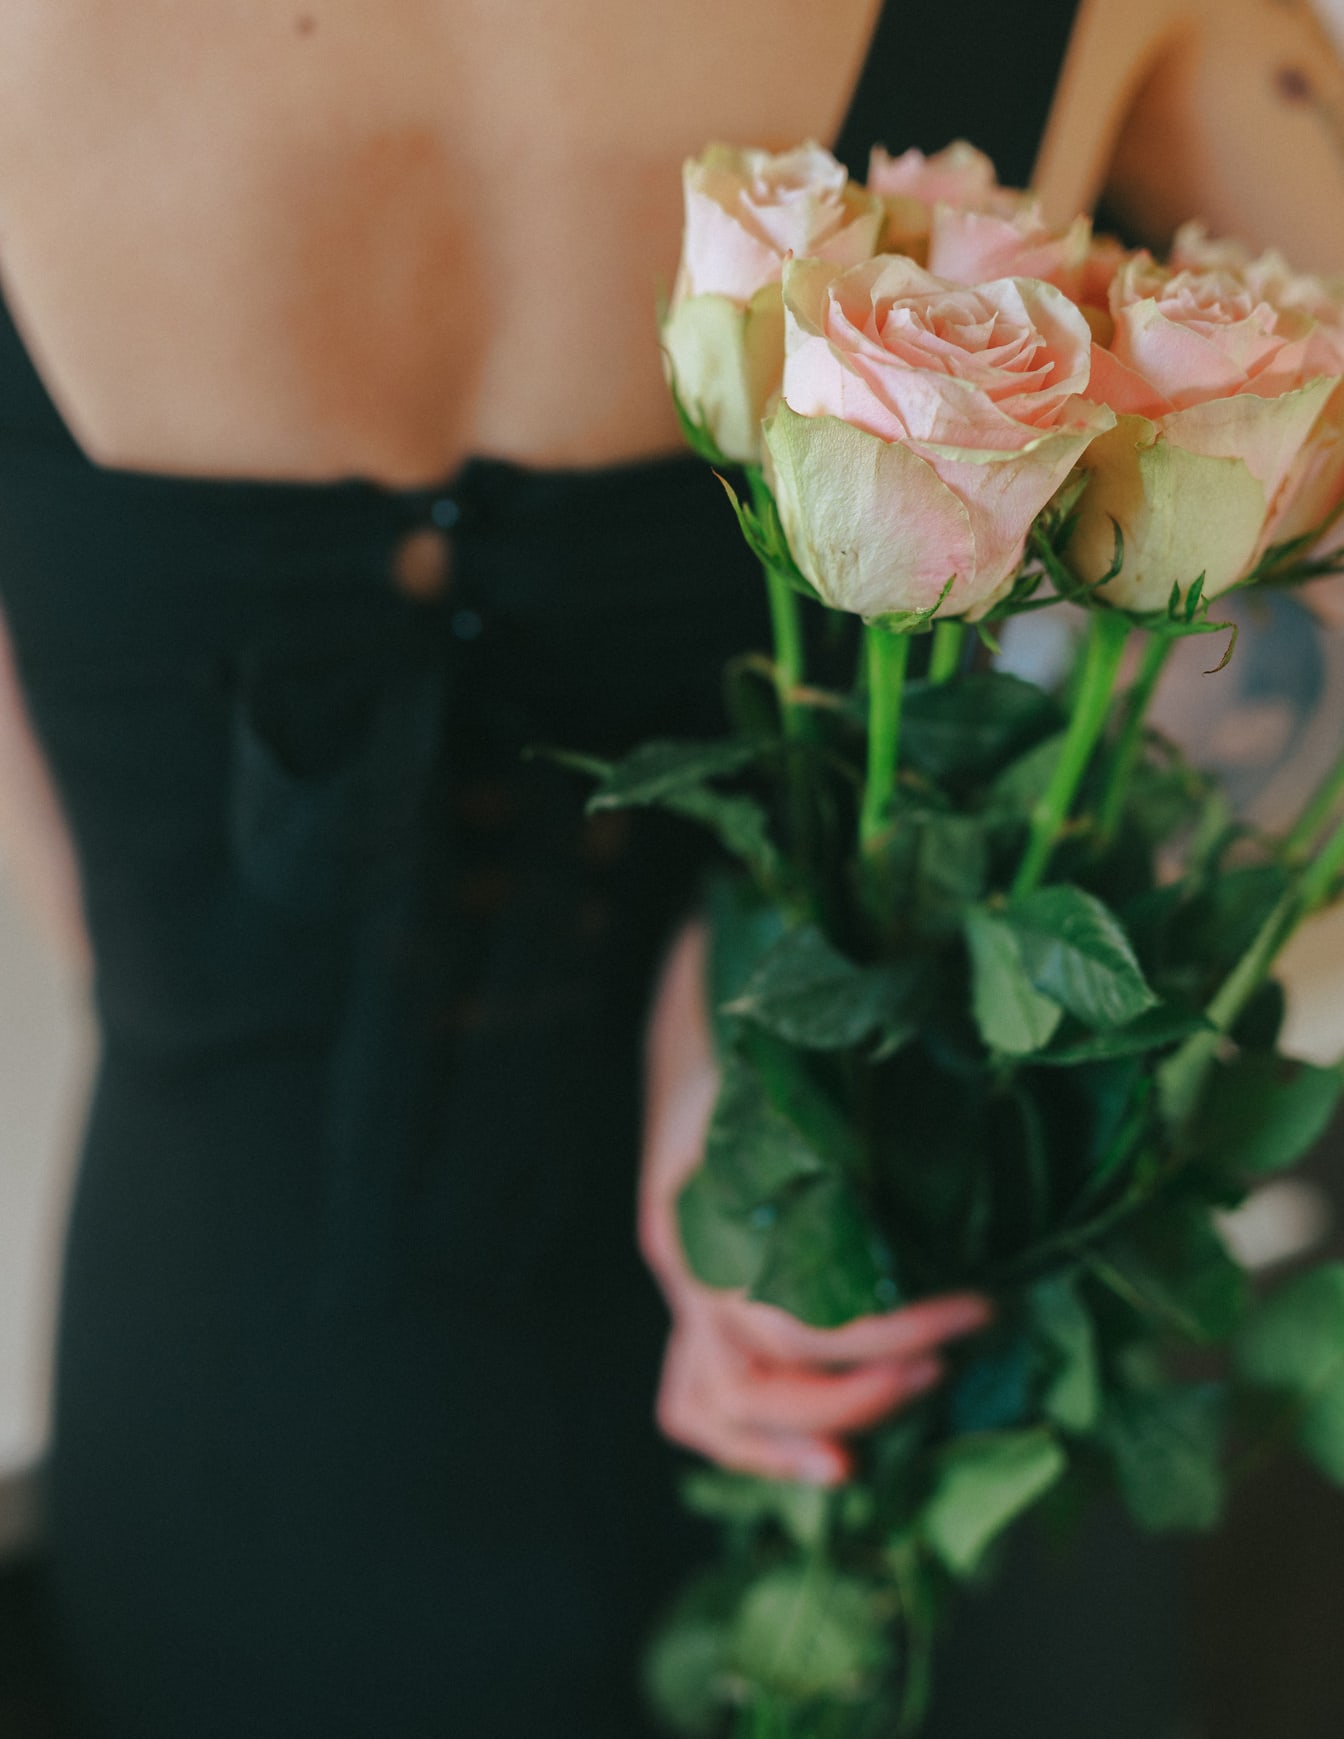 Wanita memegang buket mawar merah muda cerah di punggungnya